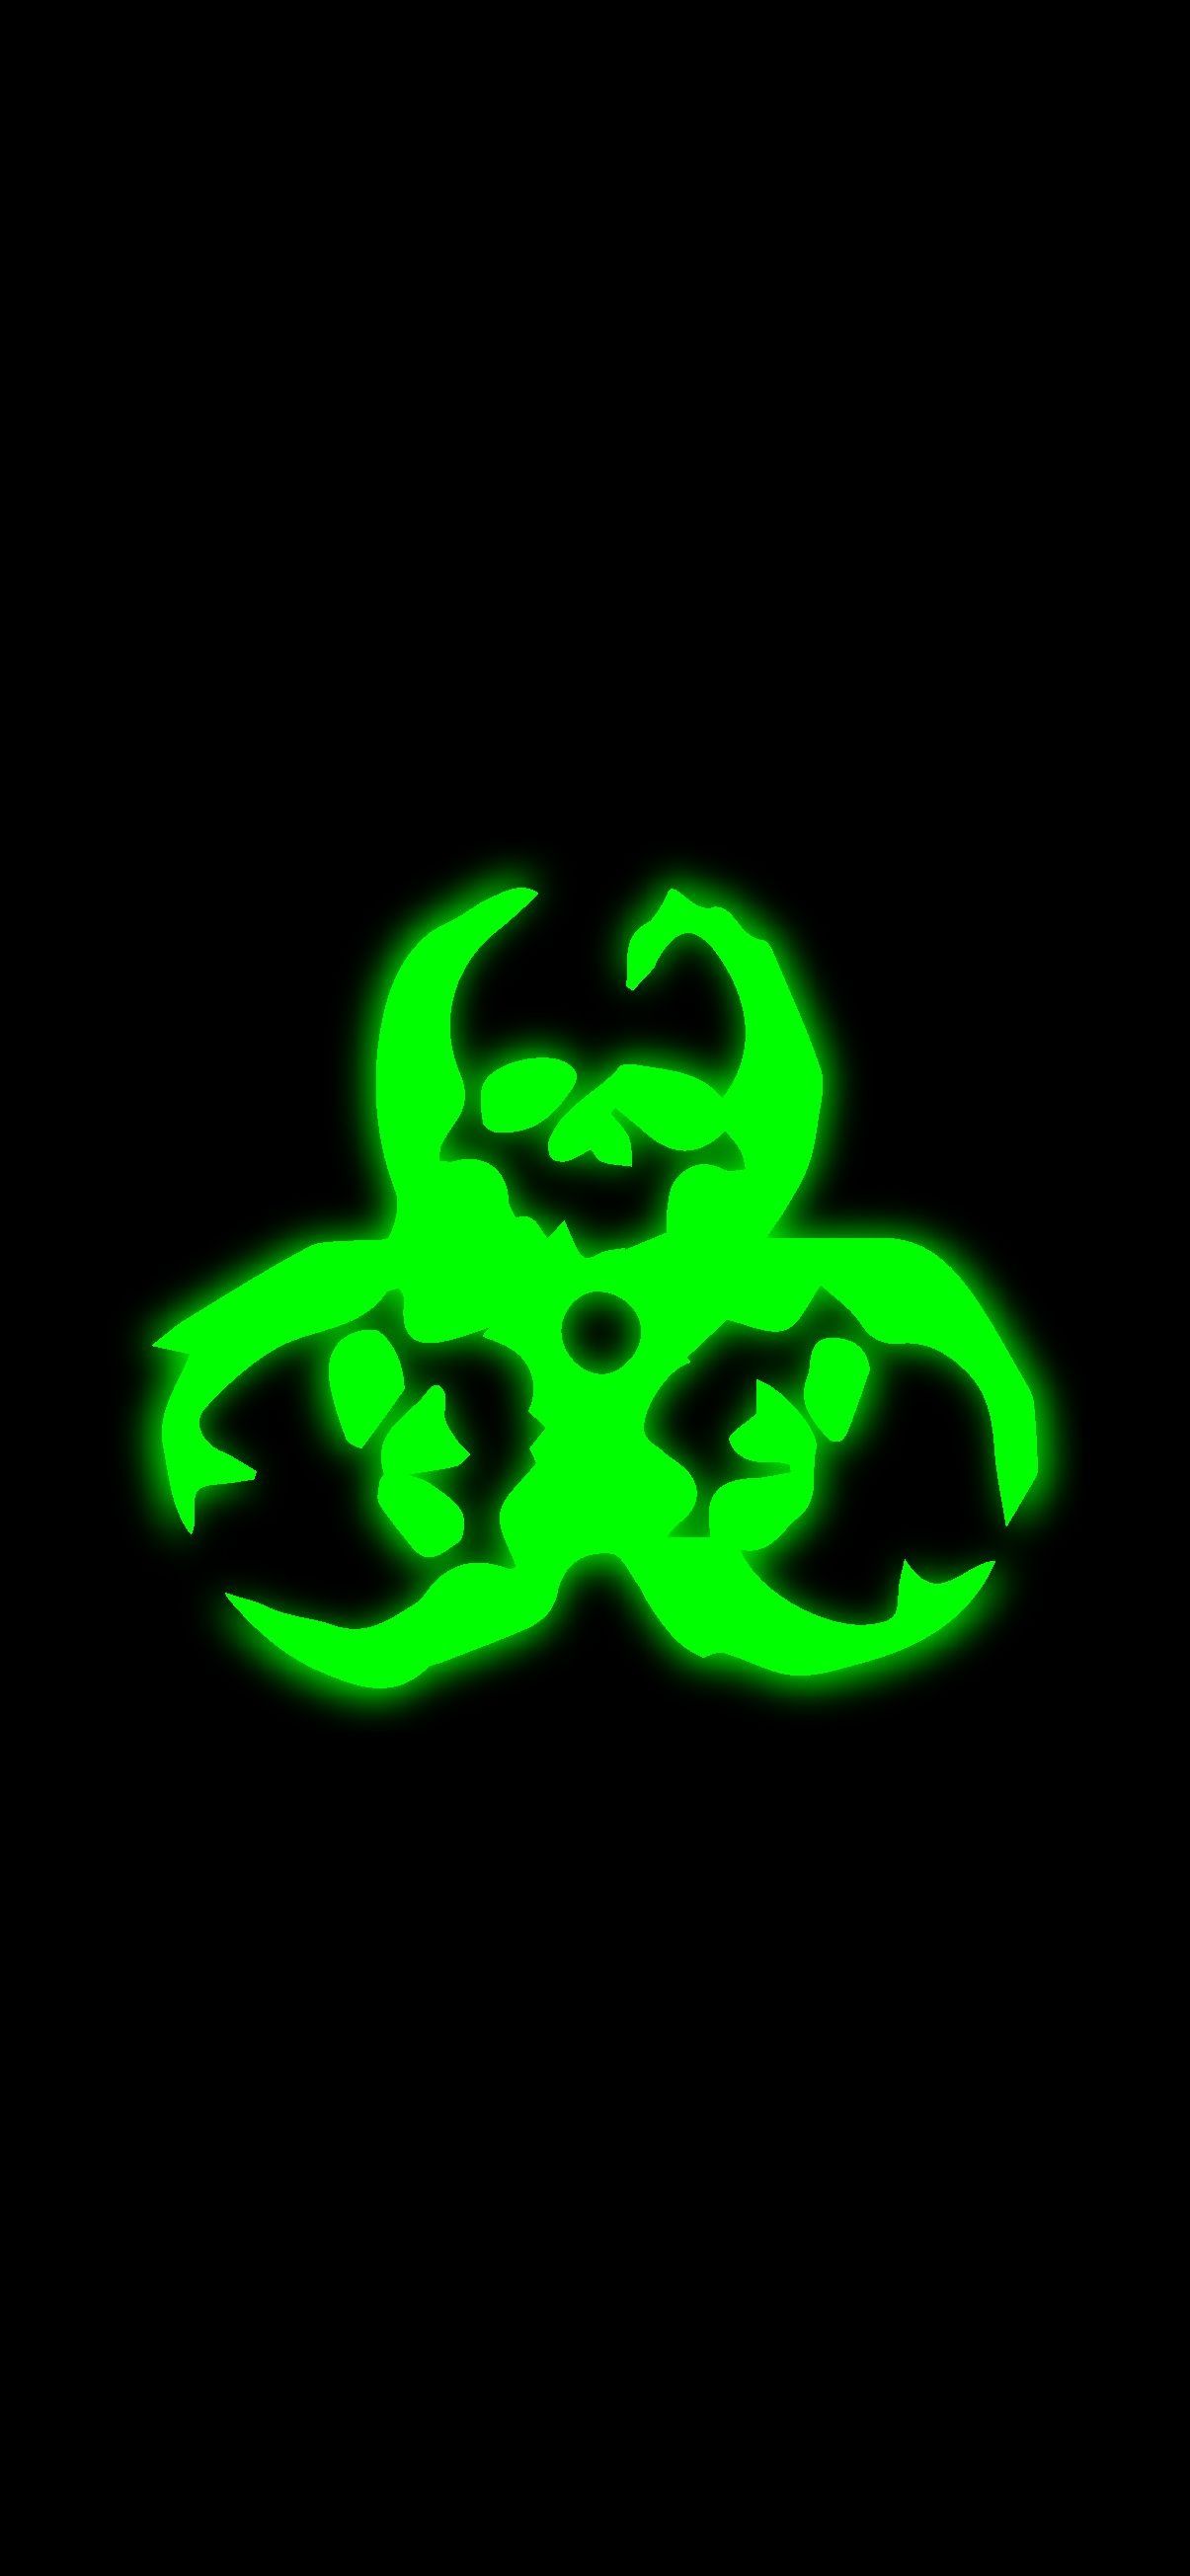 Green Biohazard: Biological hazard symbol fan art with skulls, Extremely dangerous environment. 1210x2610 HD Wallpaper.